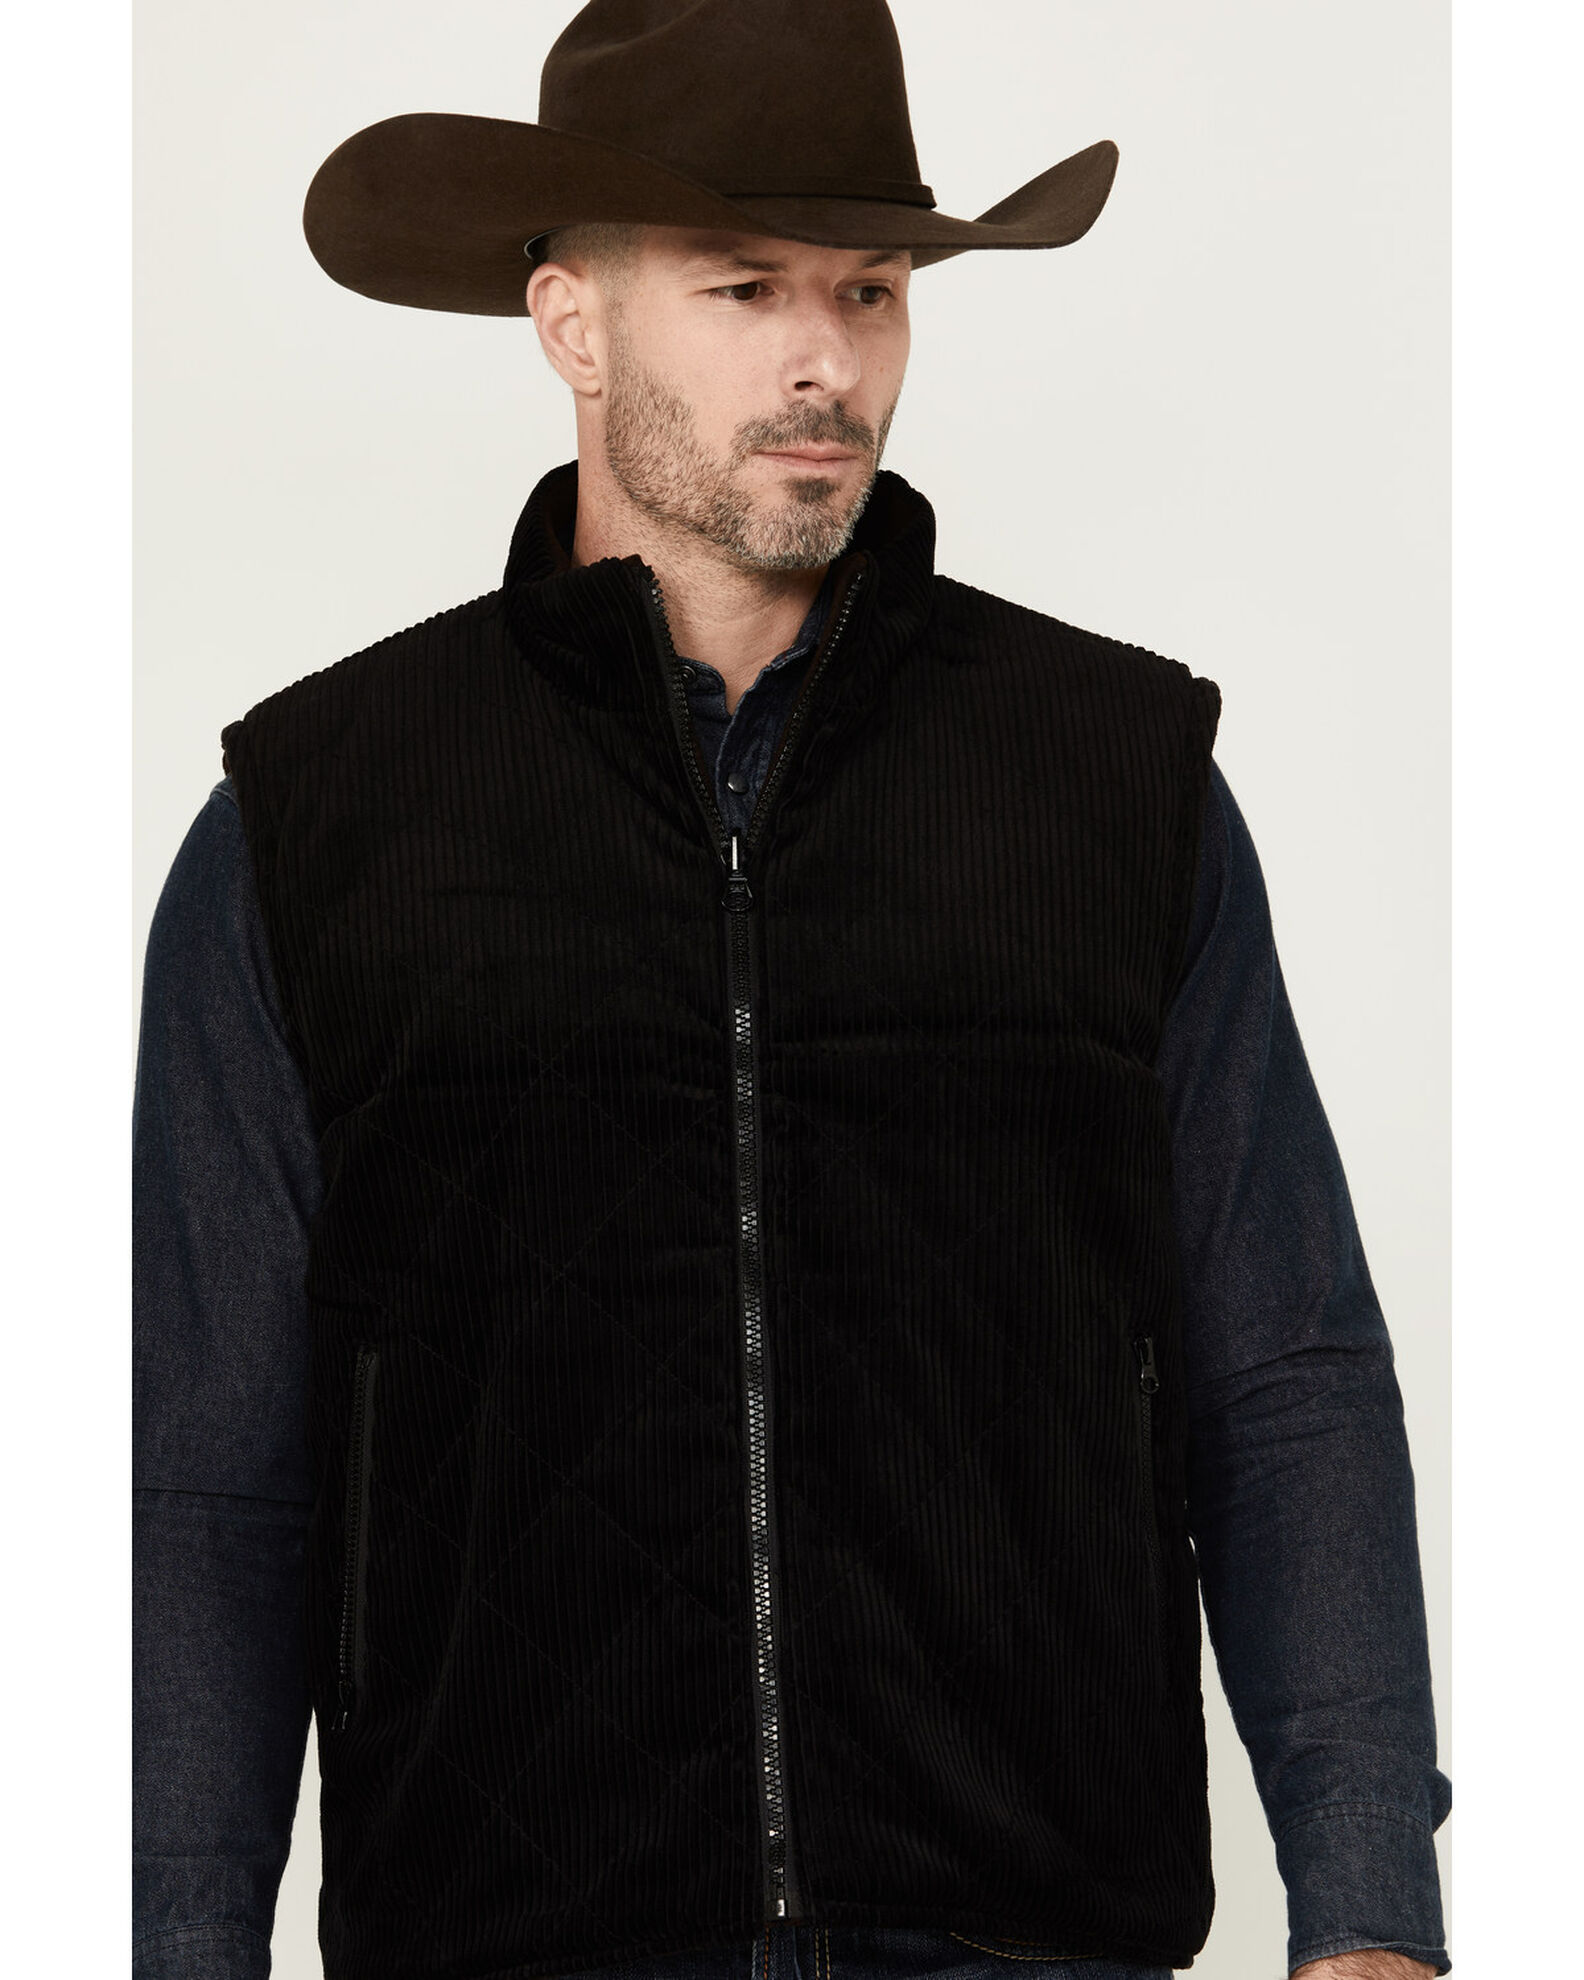 Product Name: Resistol Men's Matthew Reversible Vest